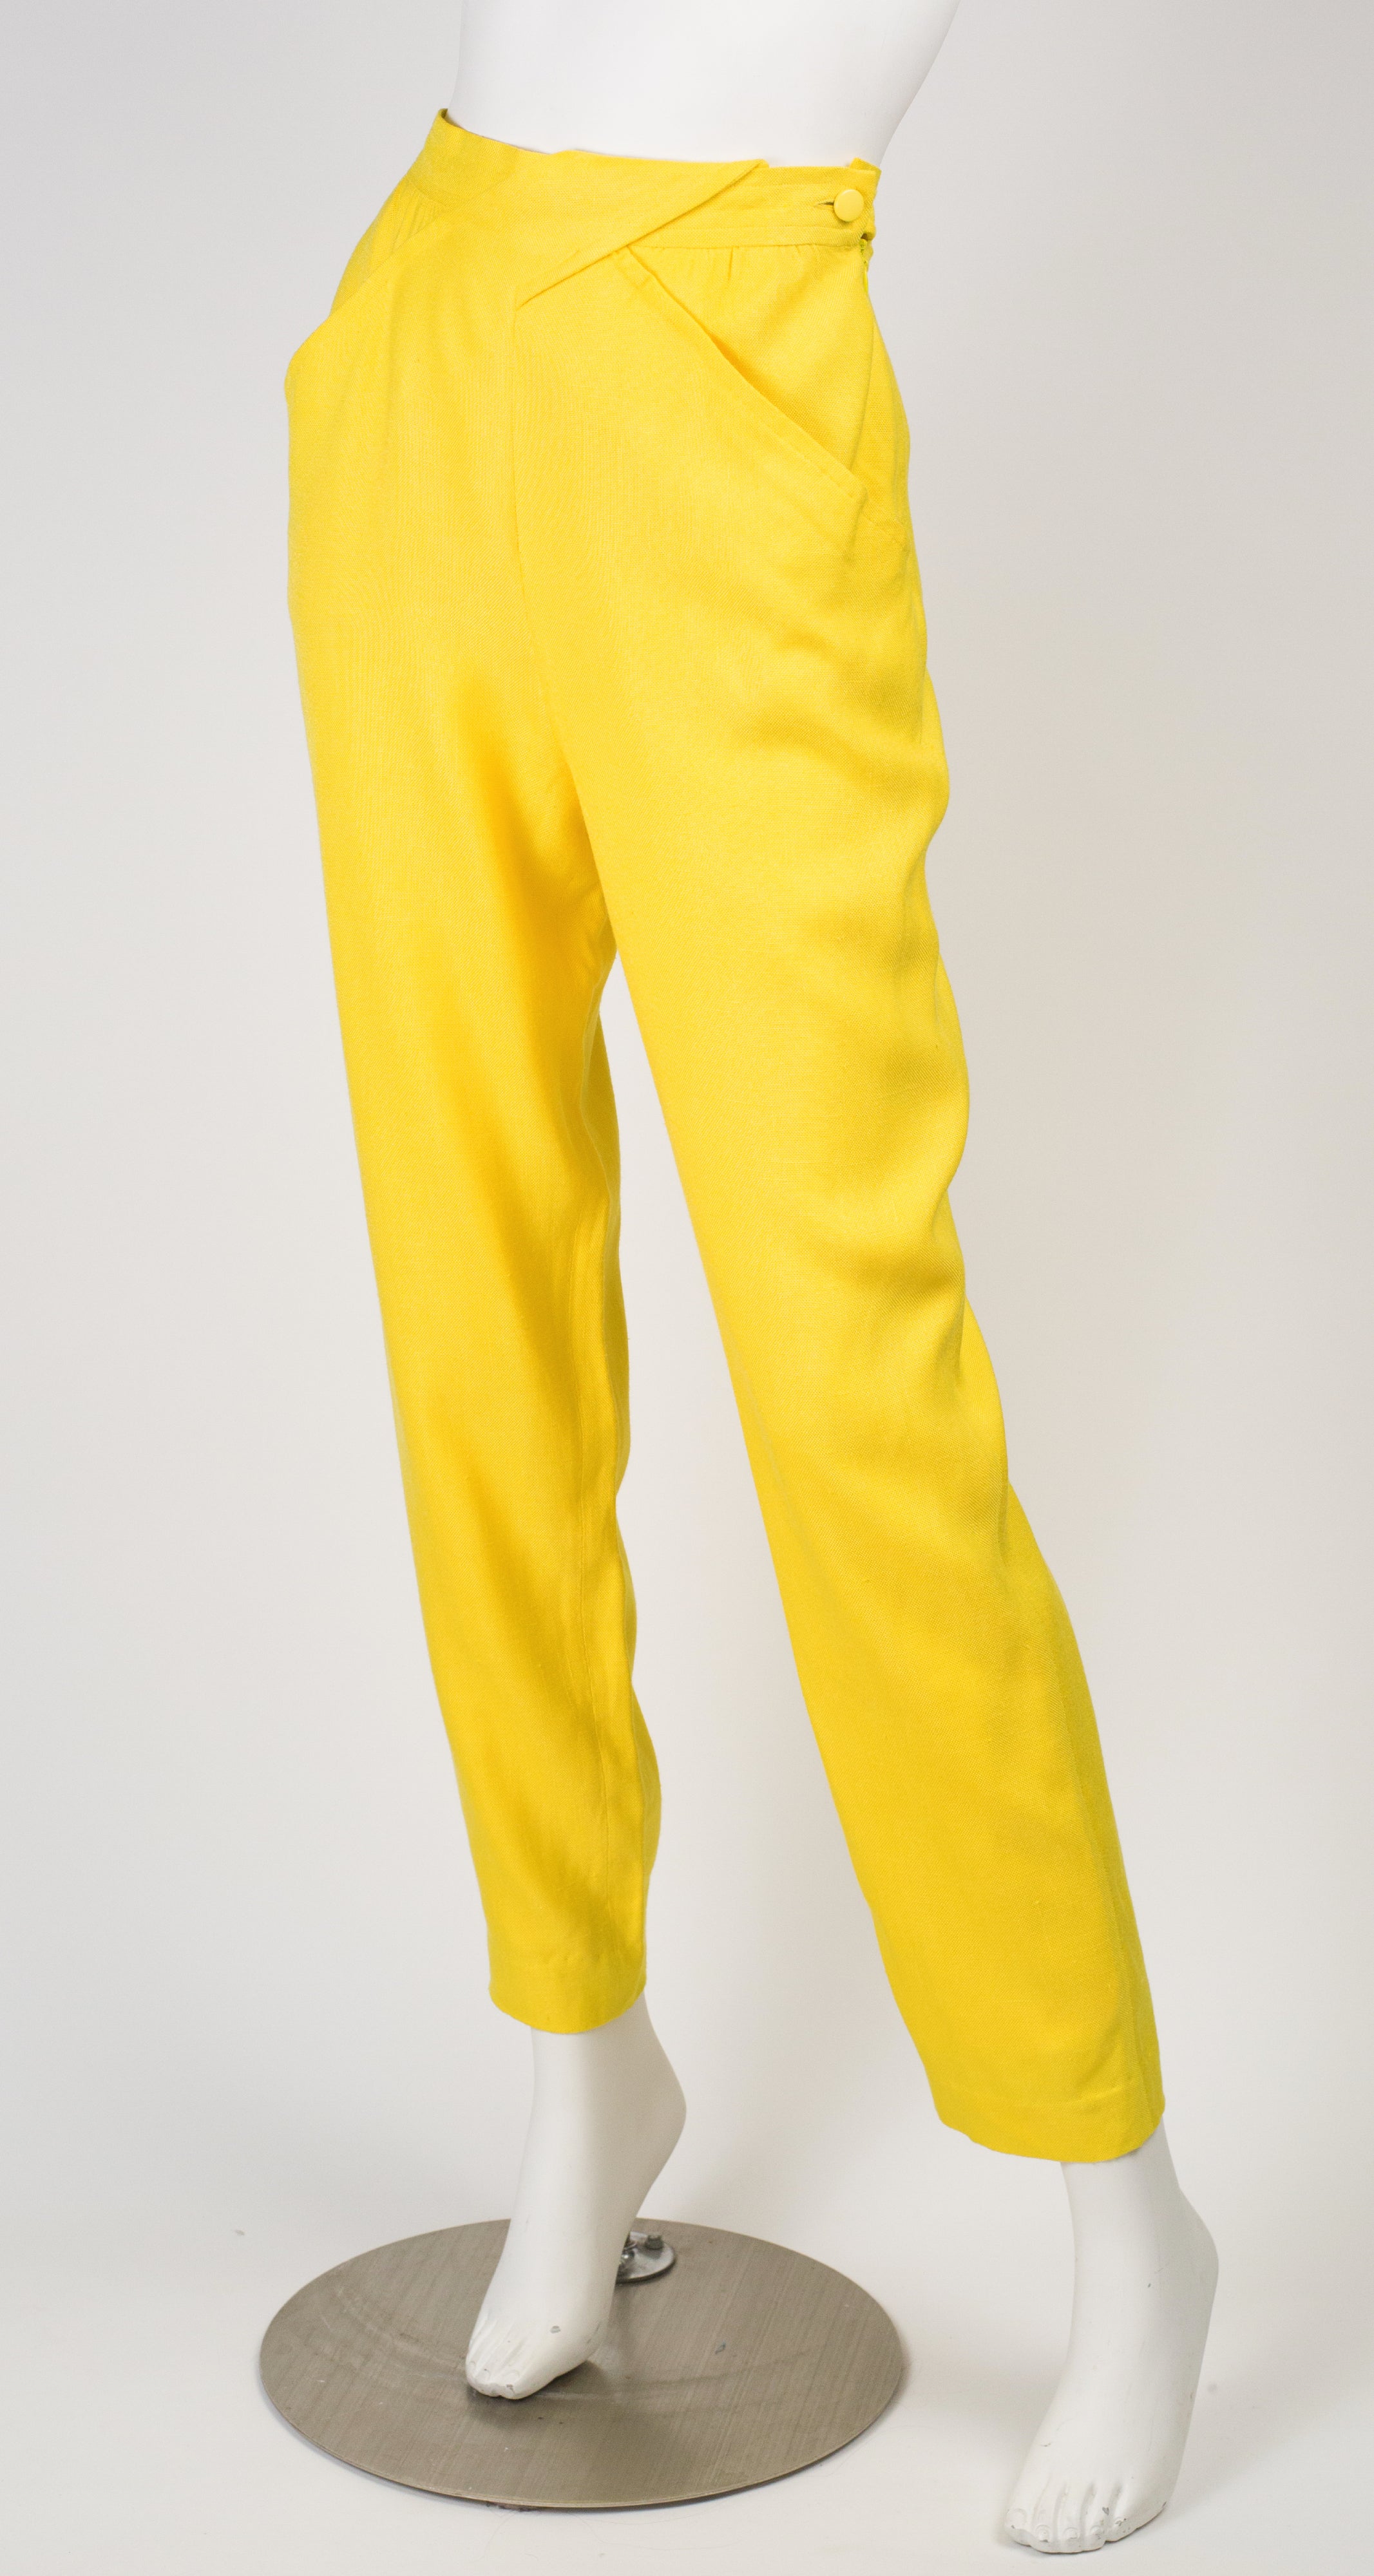 1980s Yellow Linen Blend High-Waisted Trousers